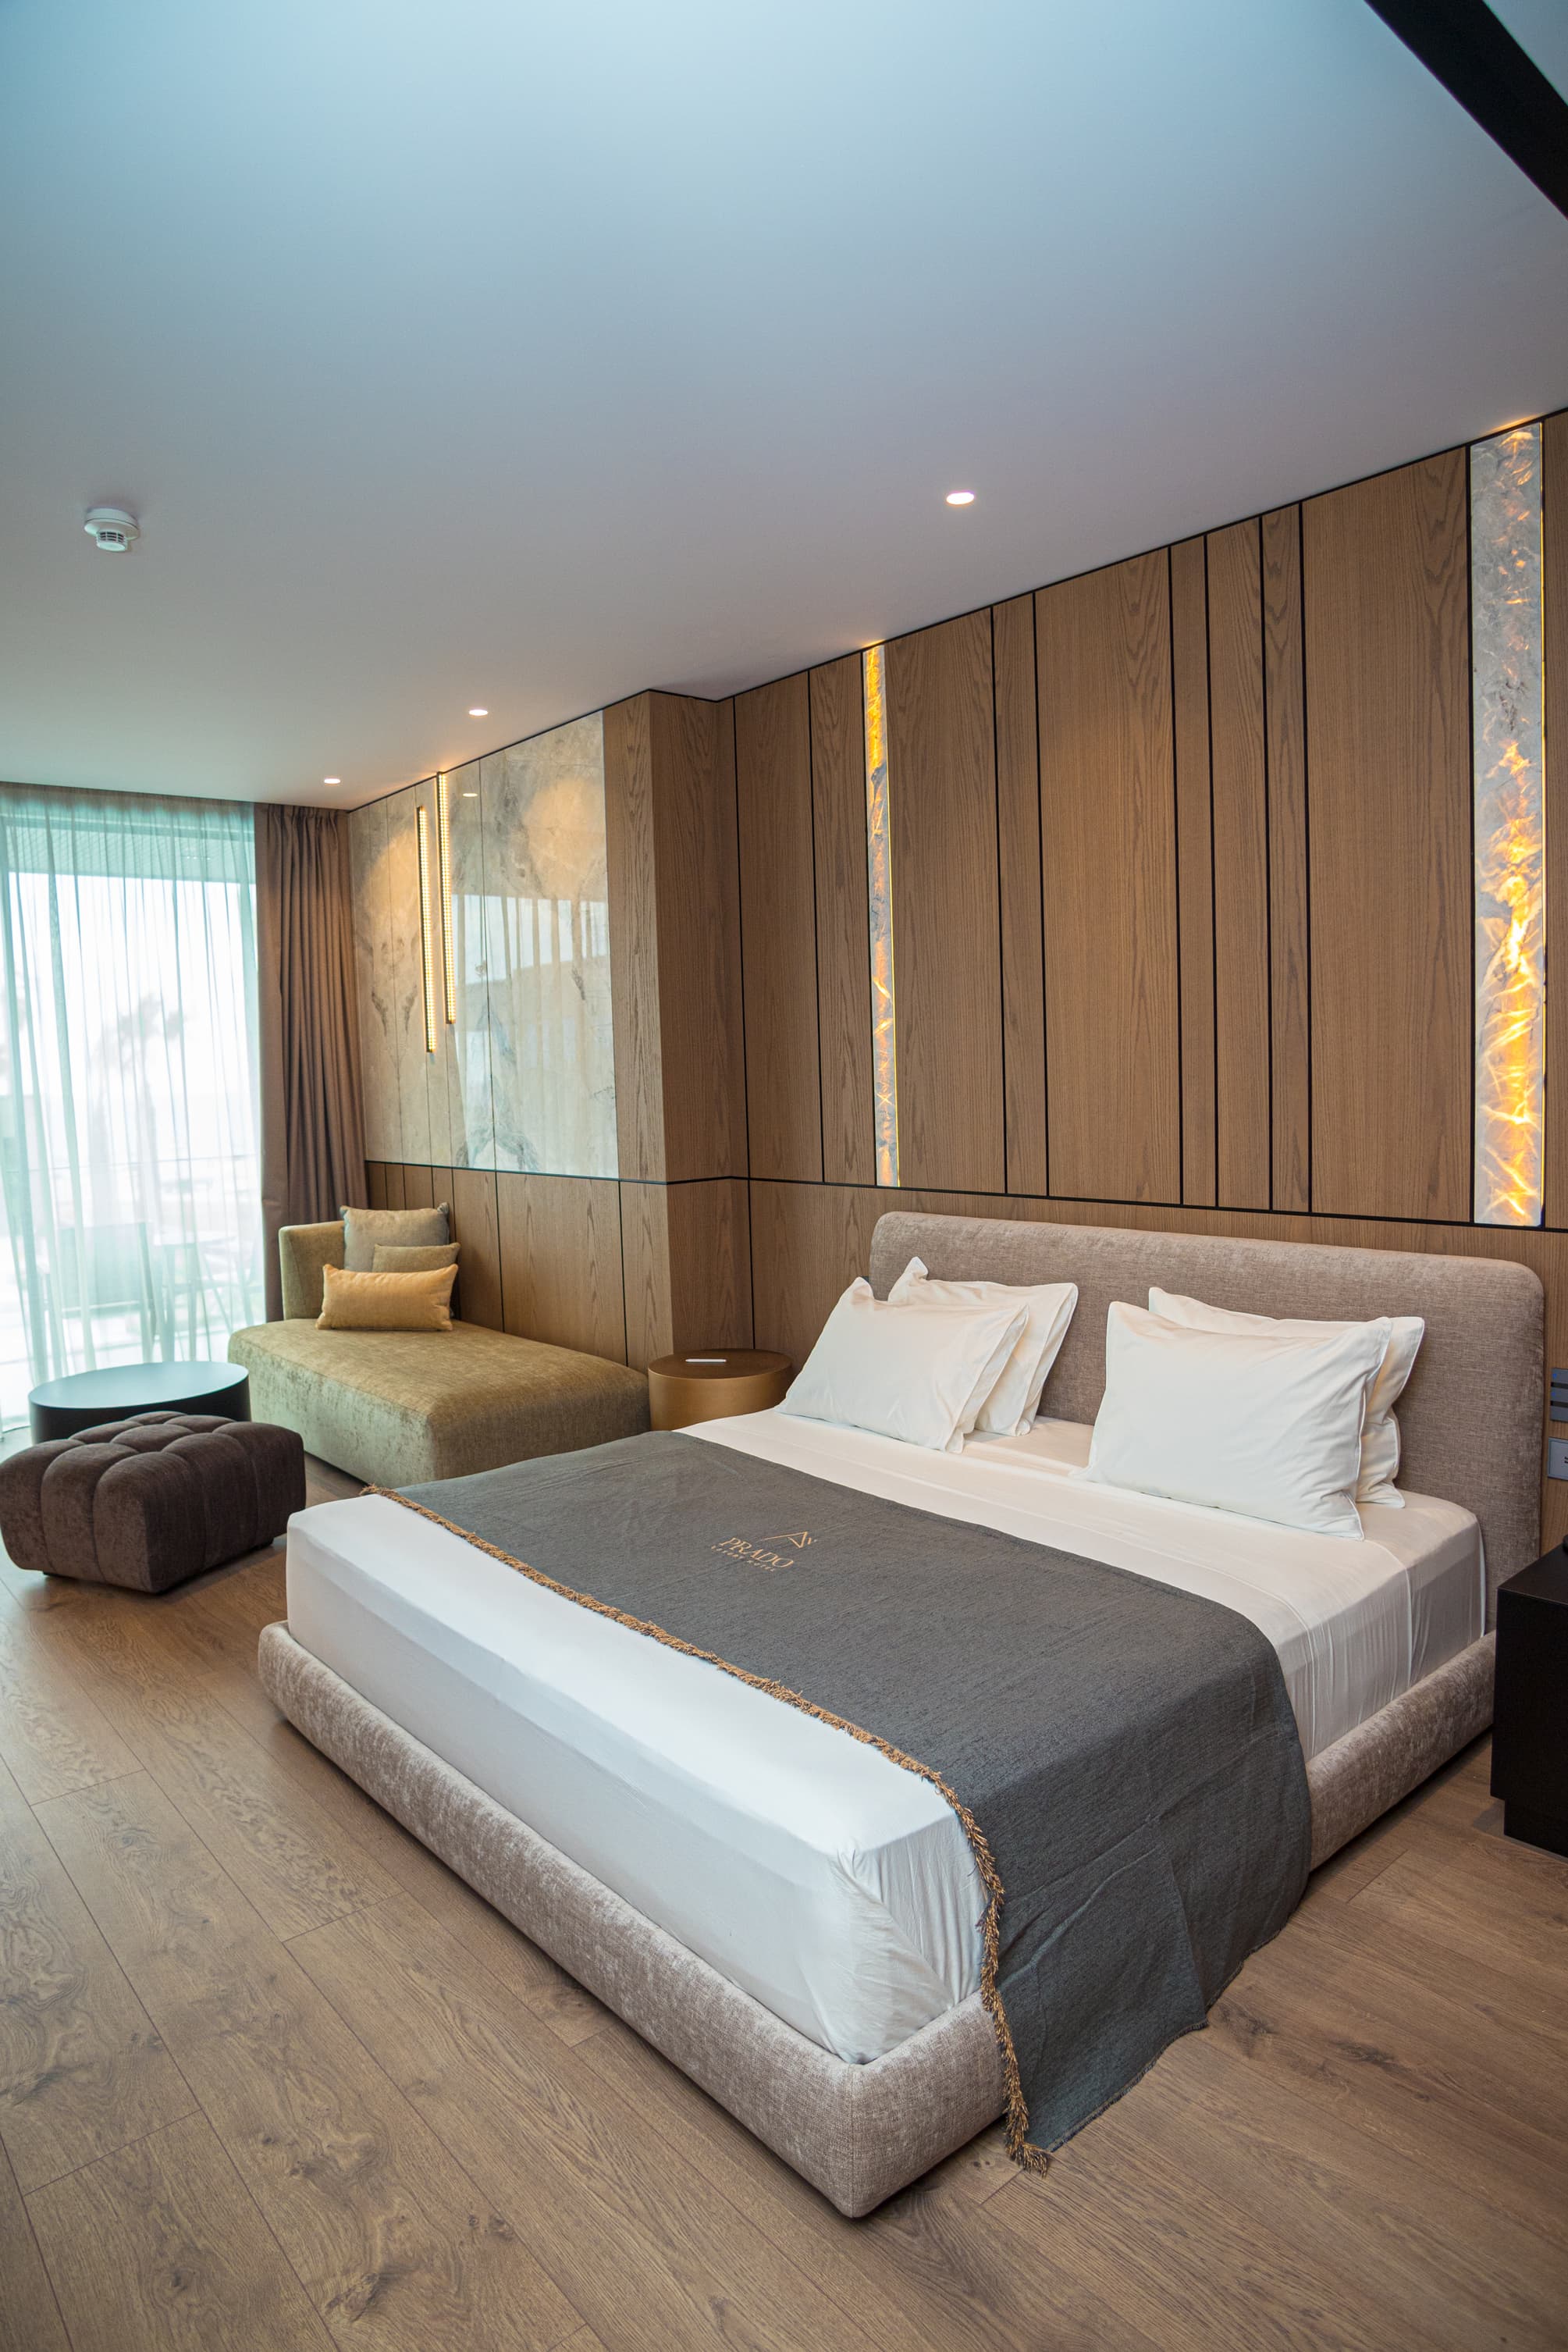 prado_luxury_hotel_room_junior_suite_seaview_beds_curtains